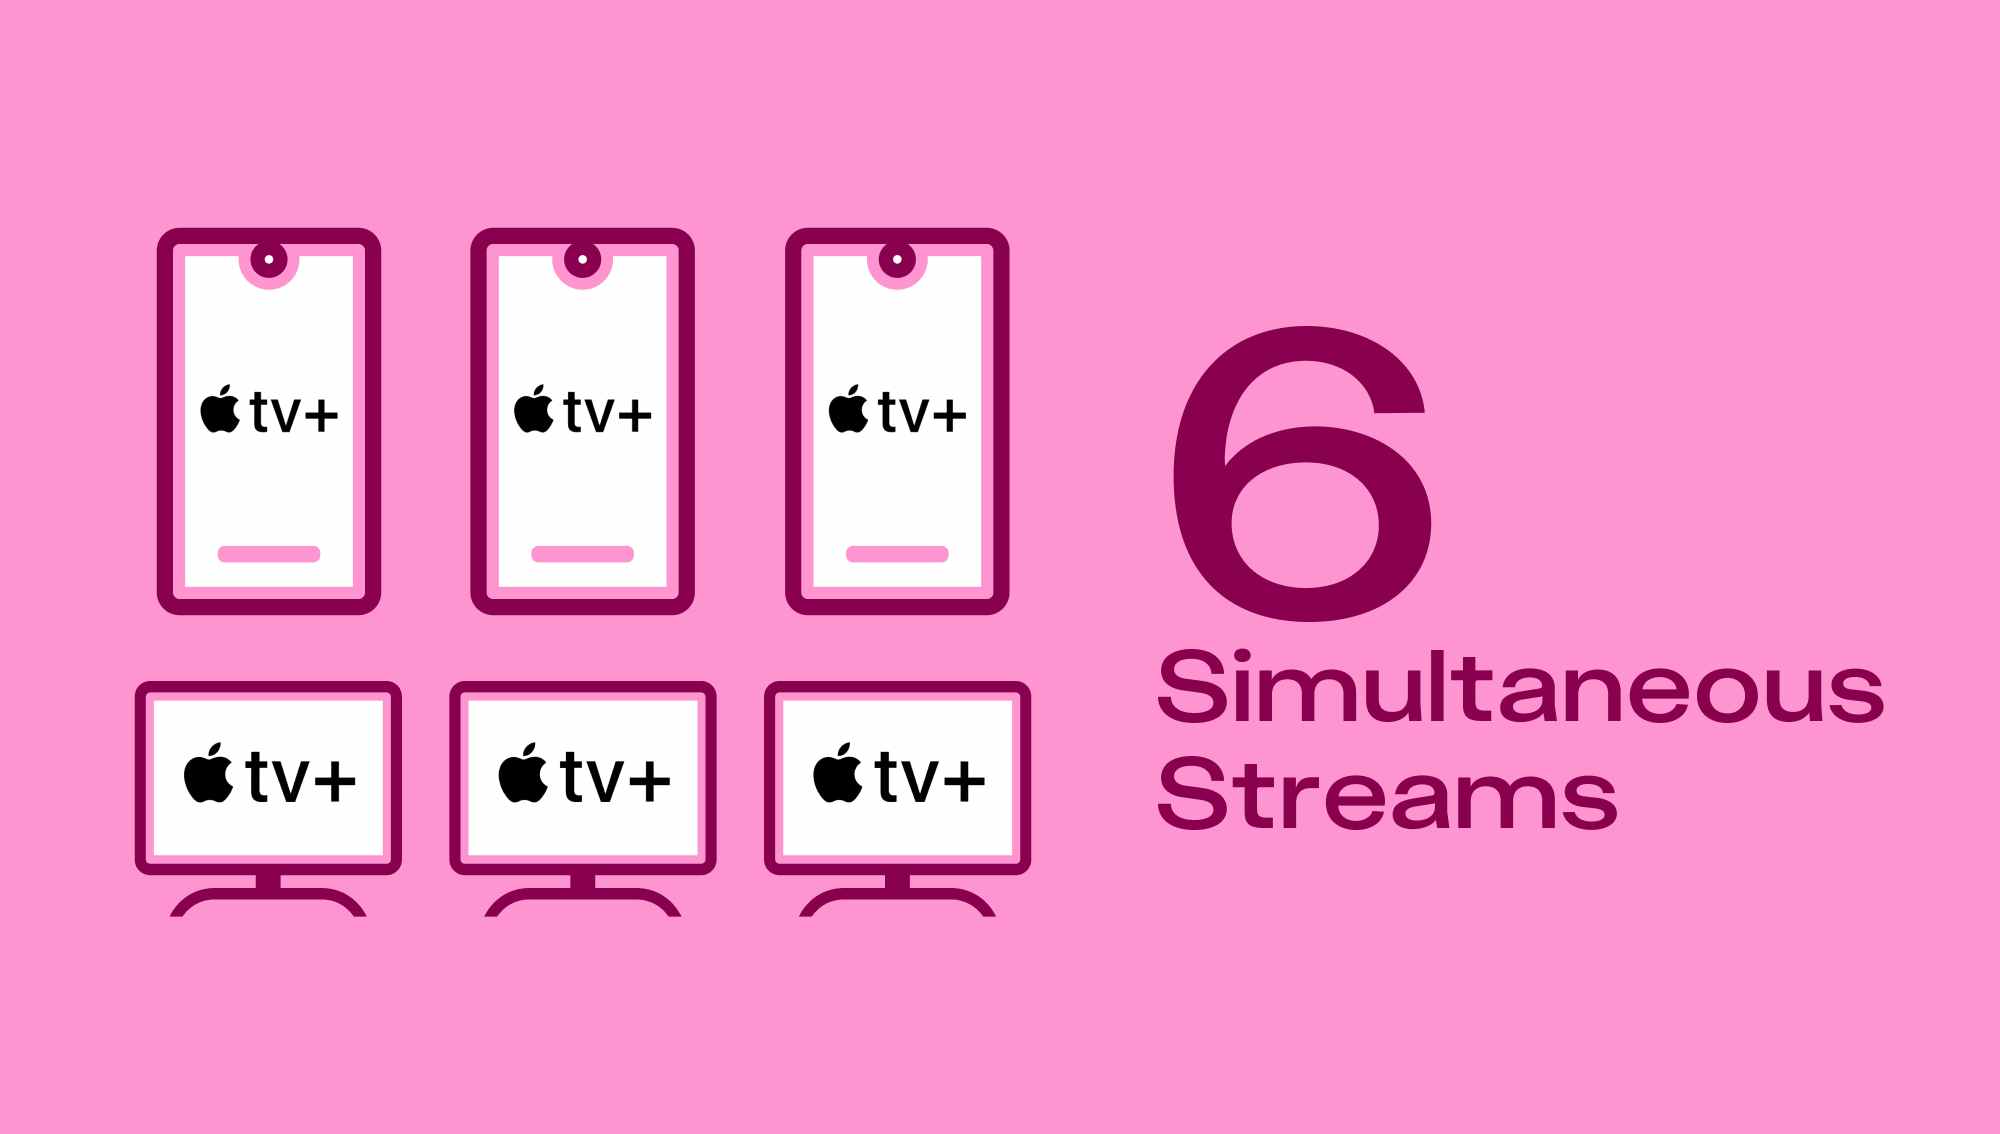 Apple TV Plus offers six simultaneous streams